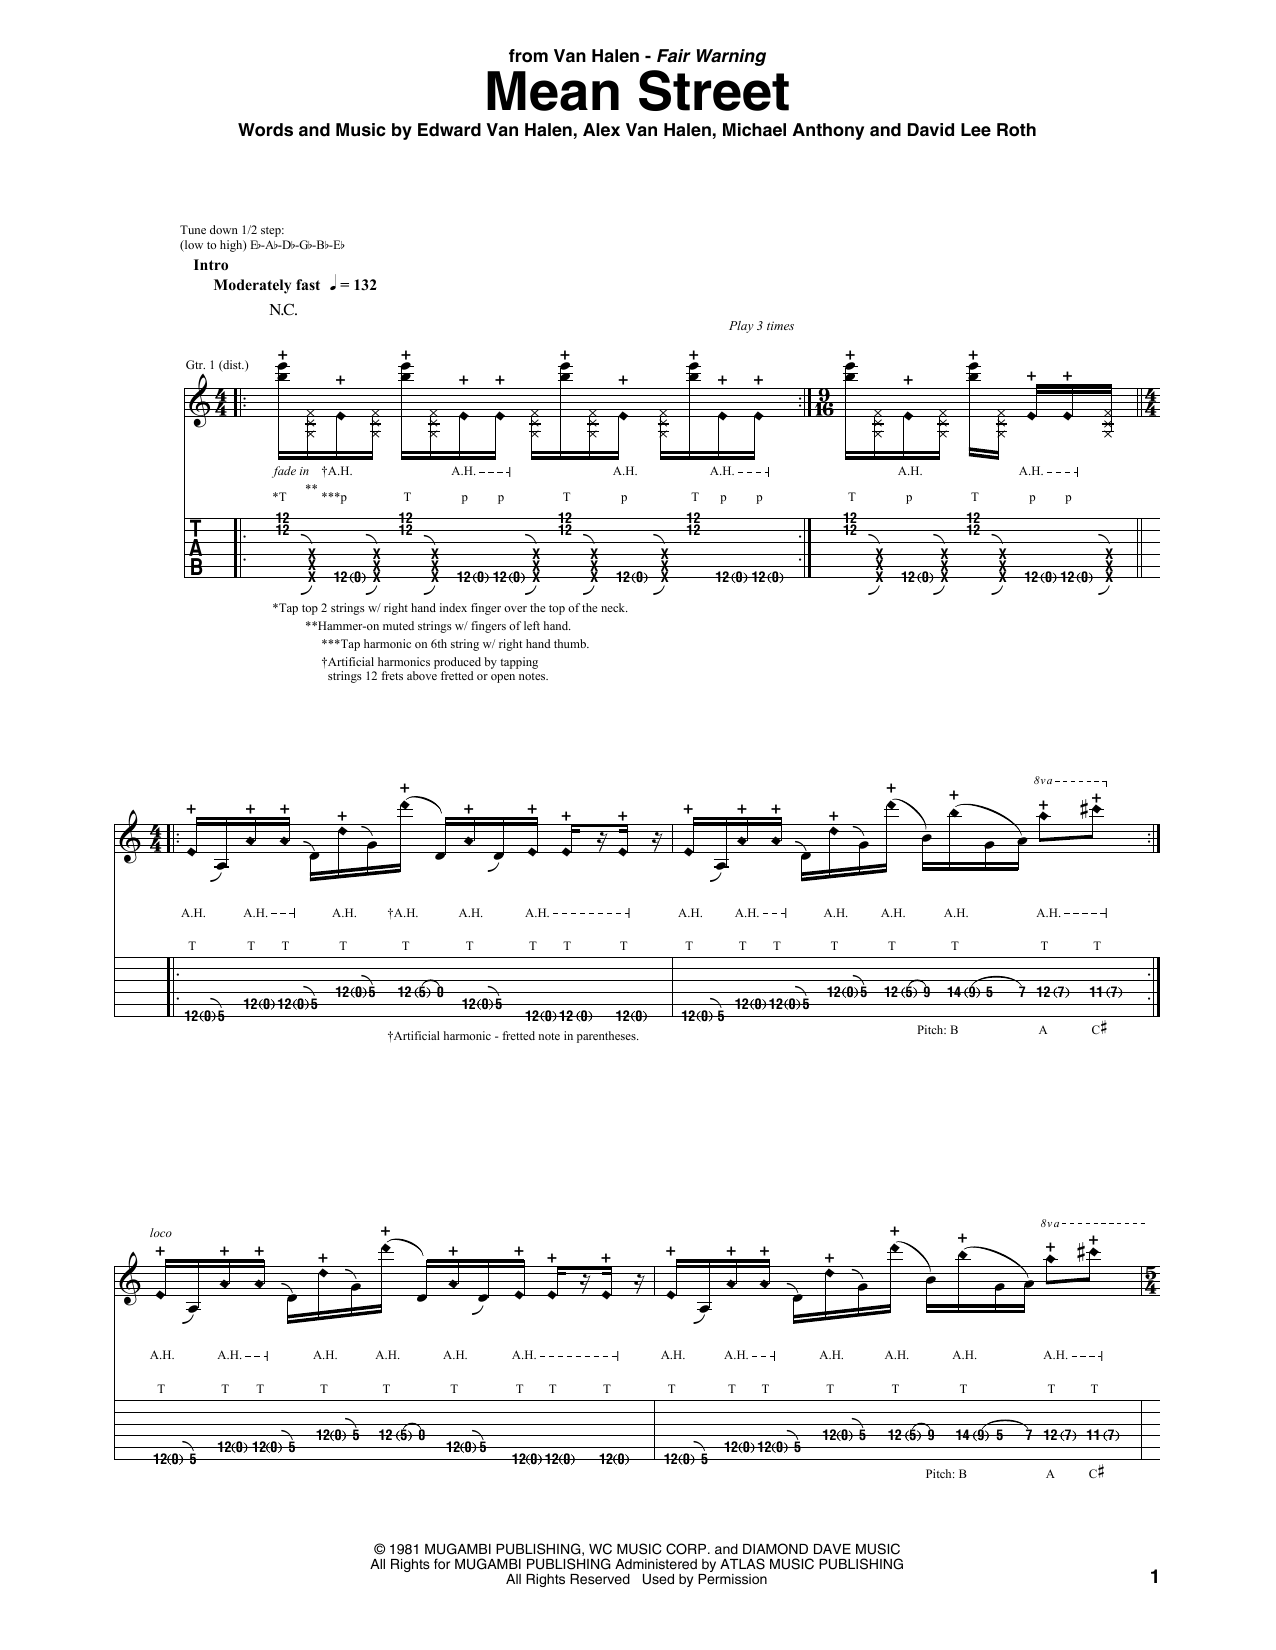 Van Halen Mean Street Sheet Music Notes & Chords for Guitar Tab Play-Along - Download or Print PDF